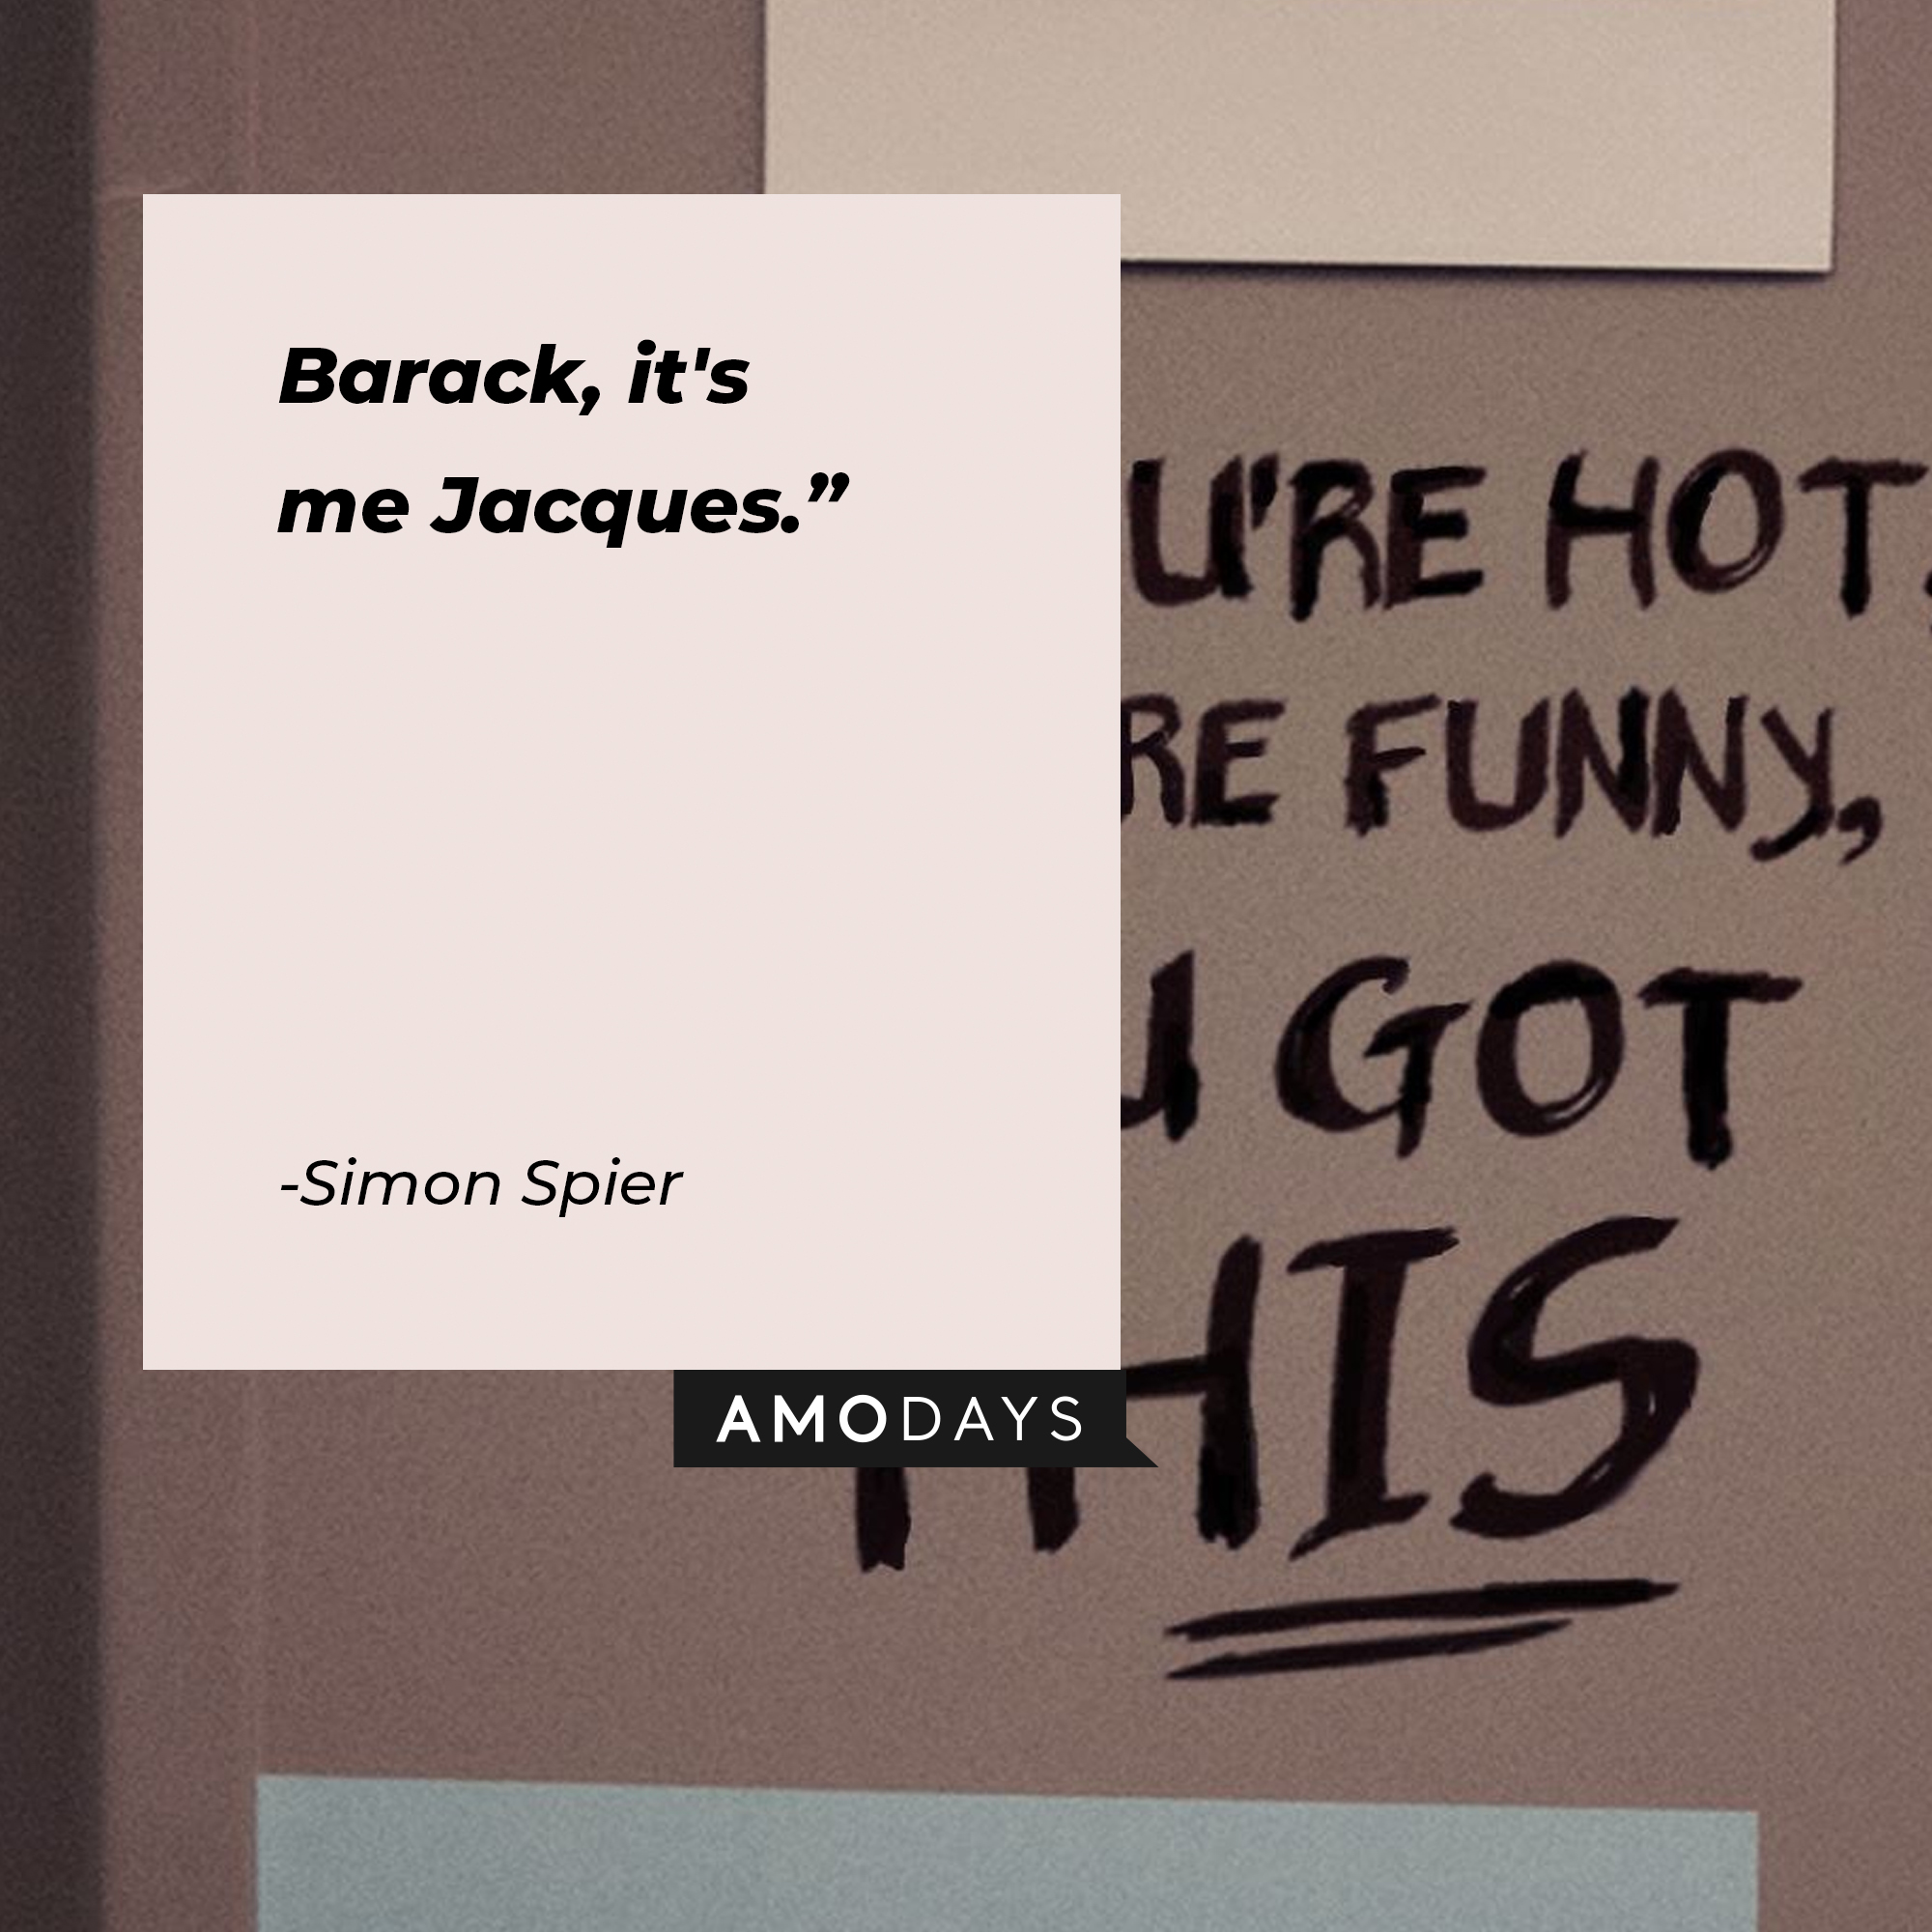 Simon Spier's quote, "Barack, it's me Jacques." | Image: facebook.com/LoveSimonMovie